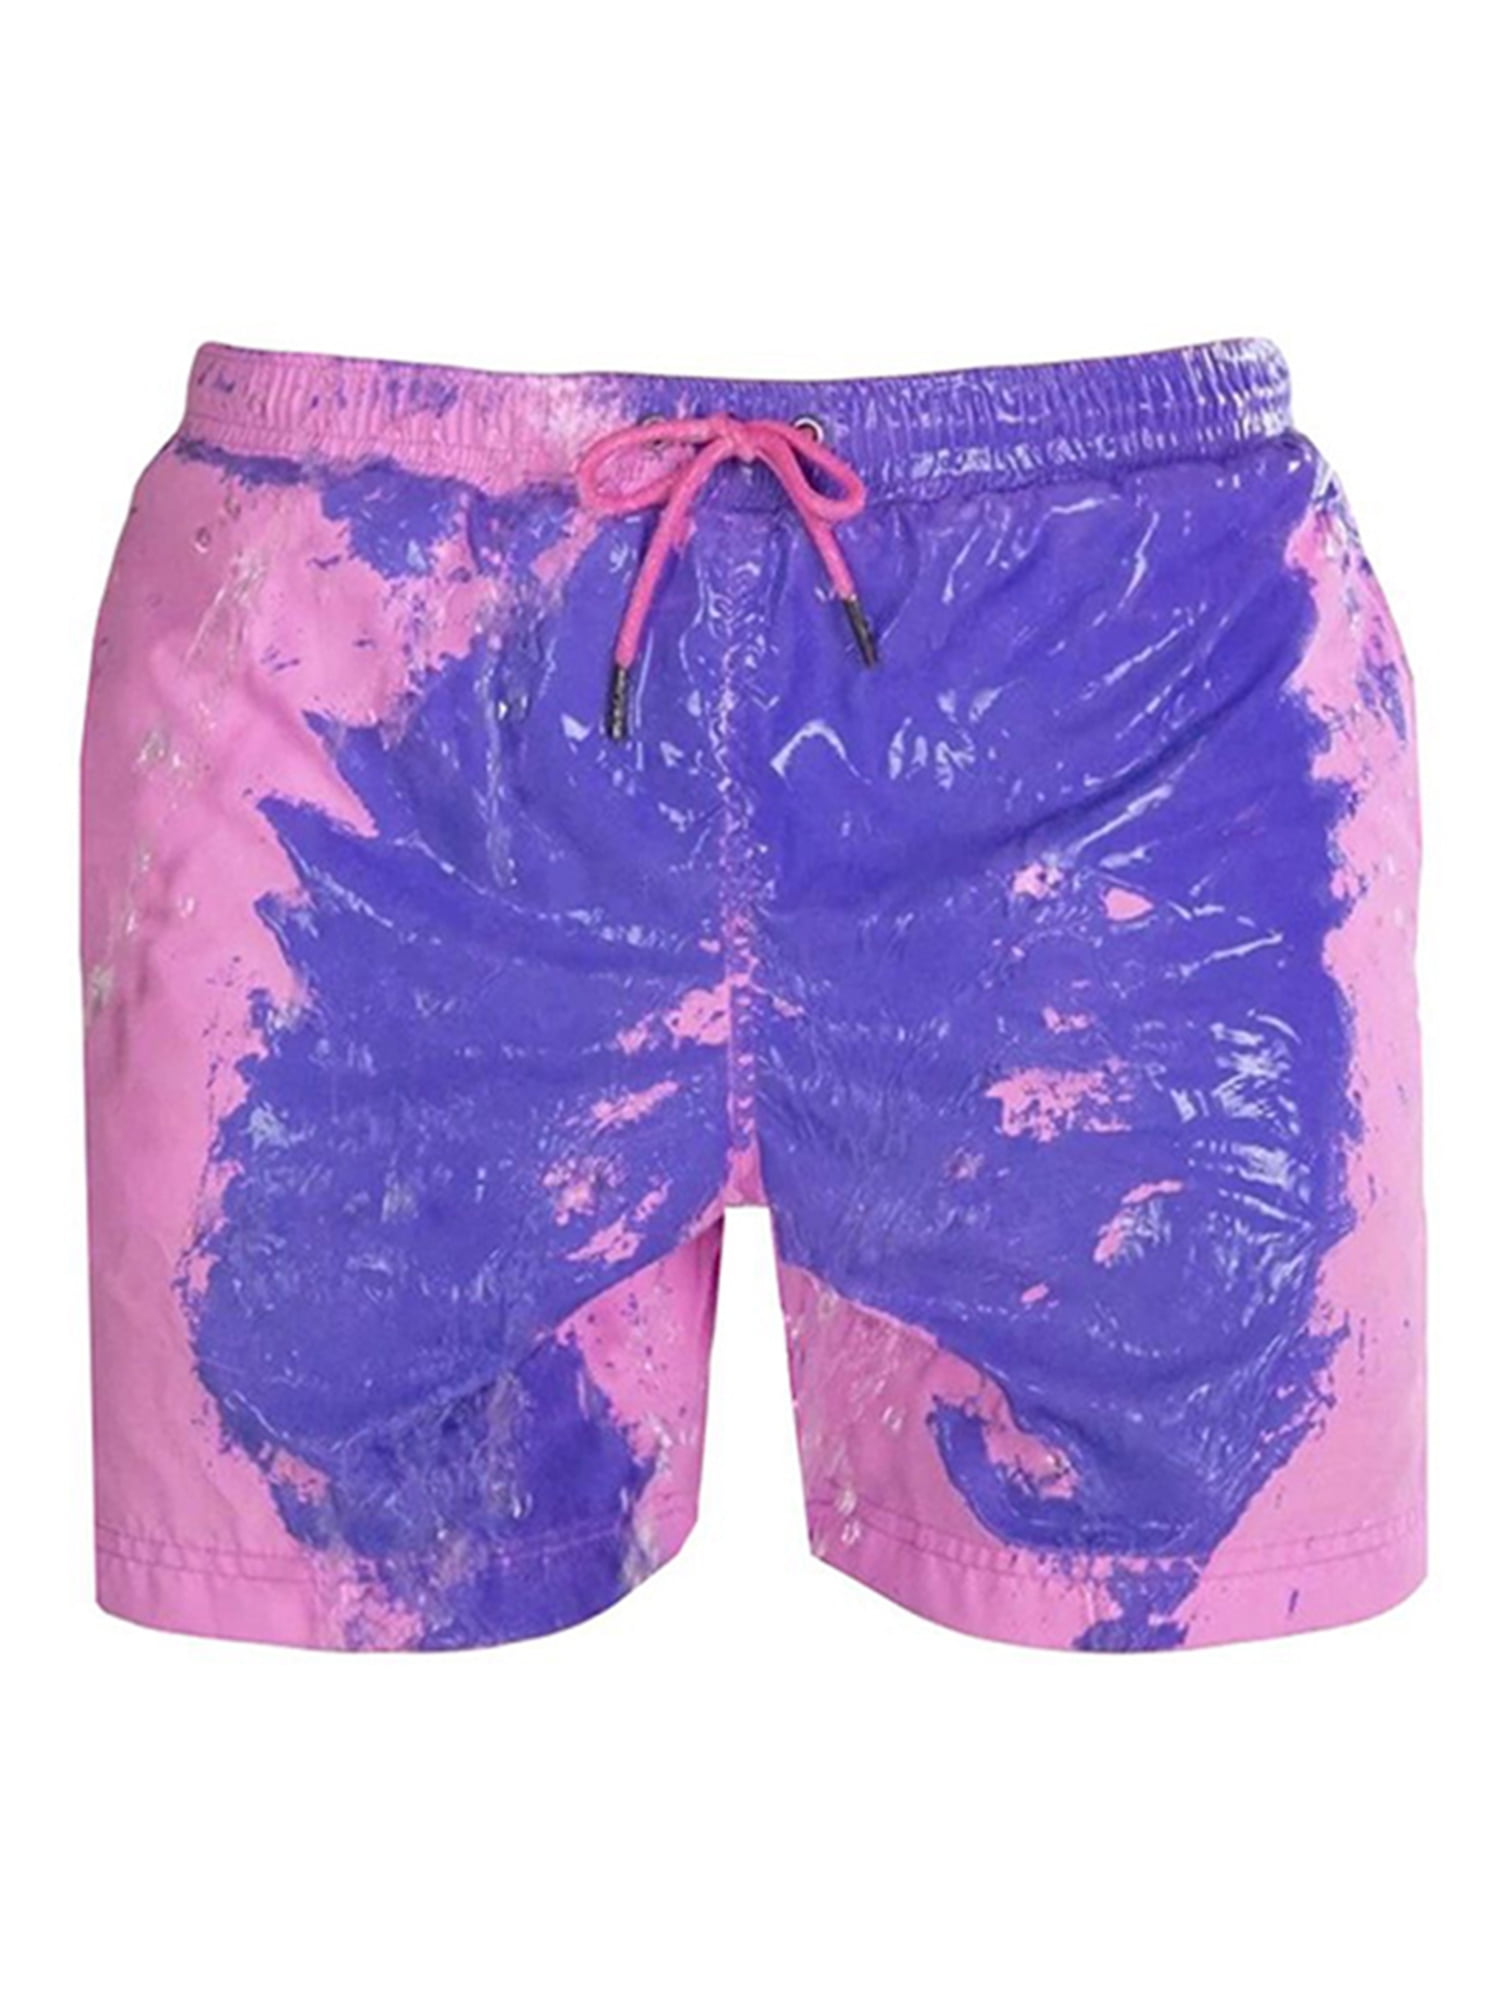 WIHVE Mens Beach Swim Trunks Black Background with Poppy Flowers Boxer Swimsuit Underwear Board Shorts with Pocket 